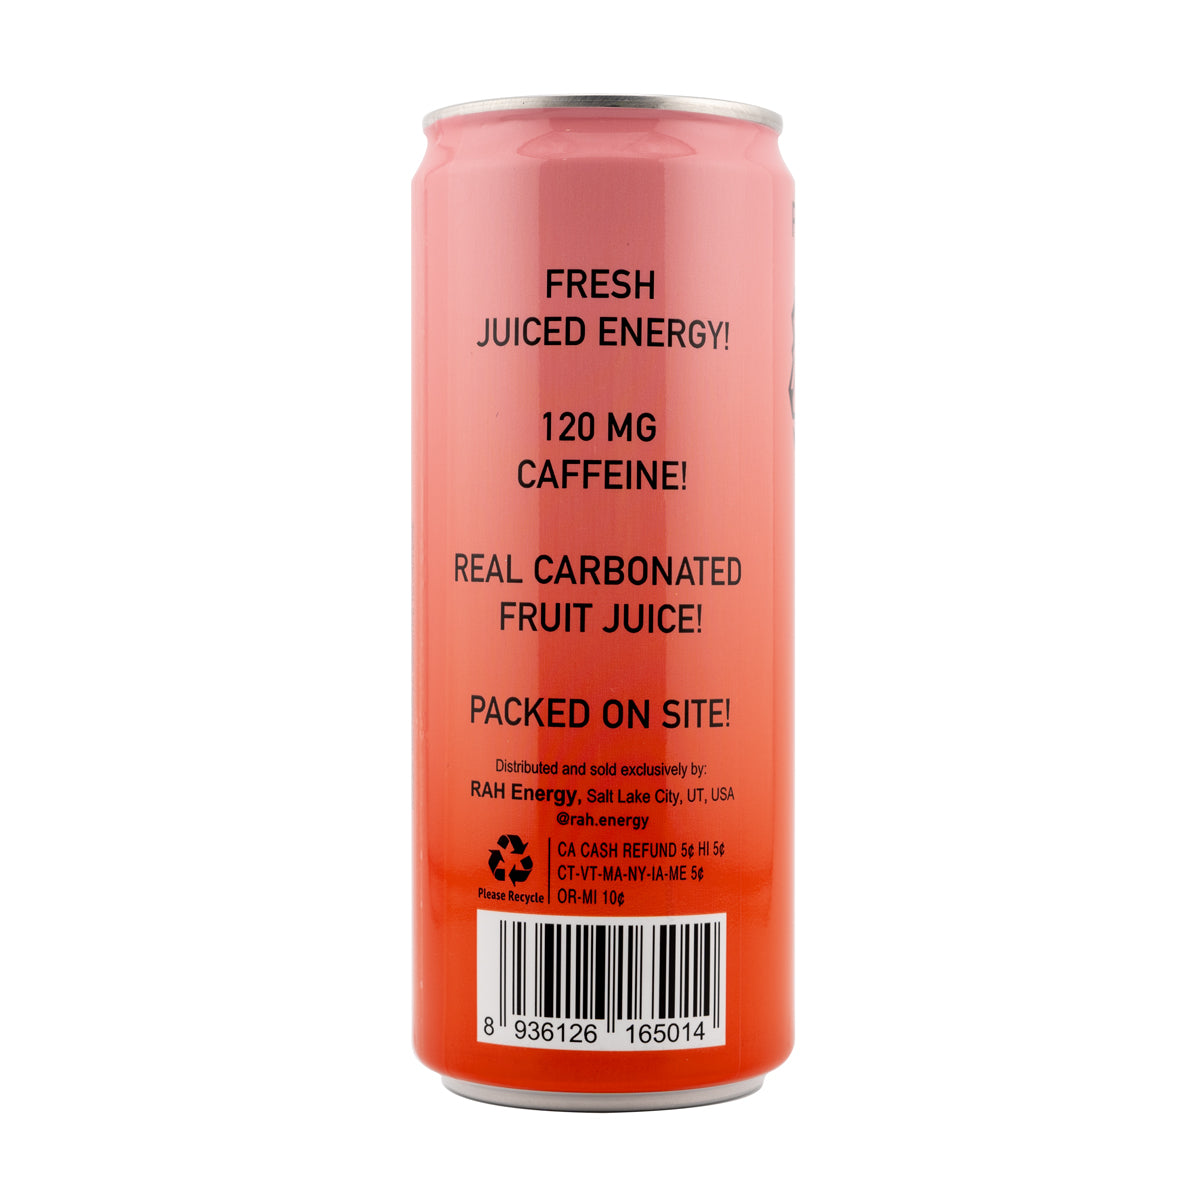 RAH Energy, Passionfruit, Sparkling Juice + Caffeine 10.8fl oz Can (12 Pack)